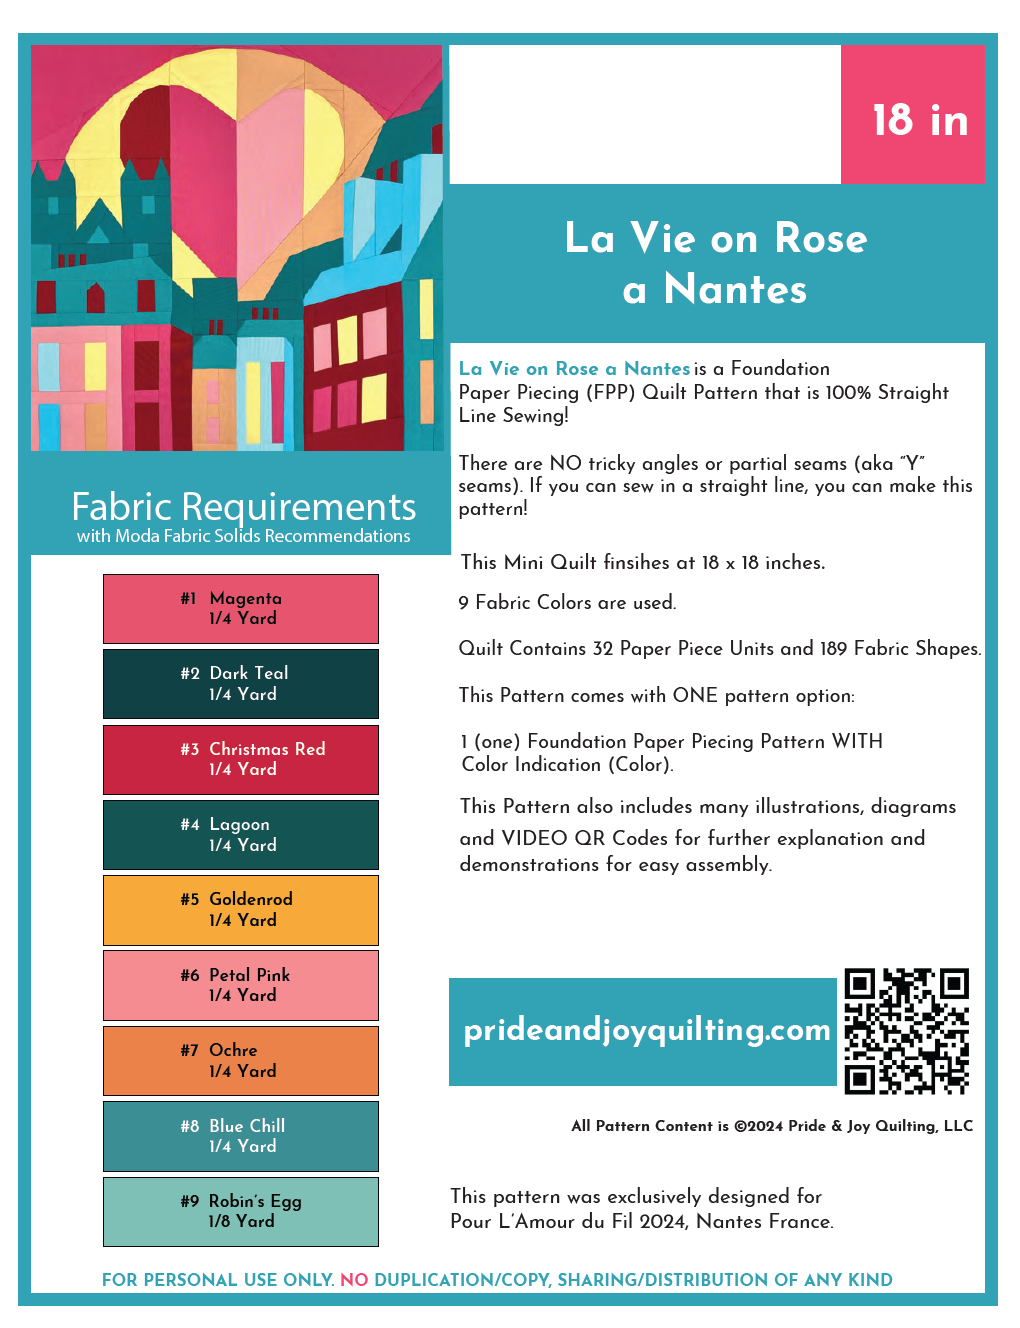 La Vie on Rose a Nantes Foundation Paper Piecing Quilt Block ENGLISH